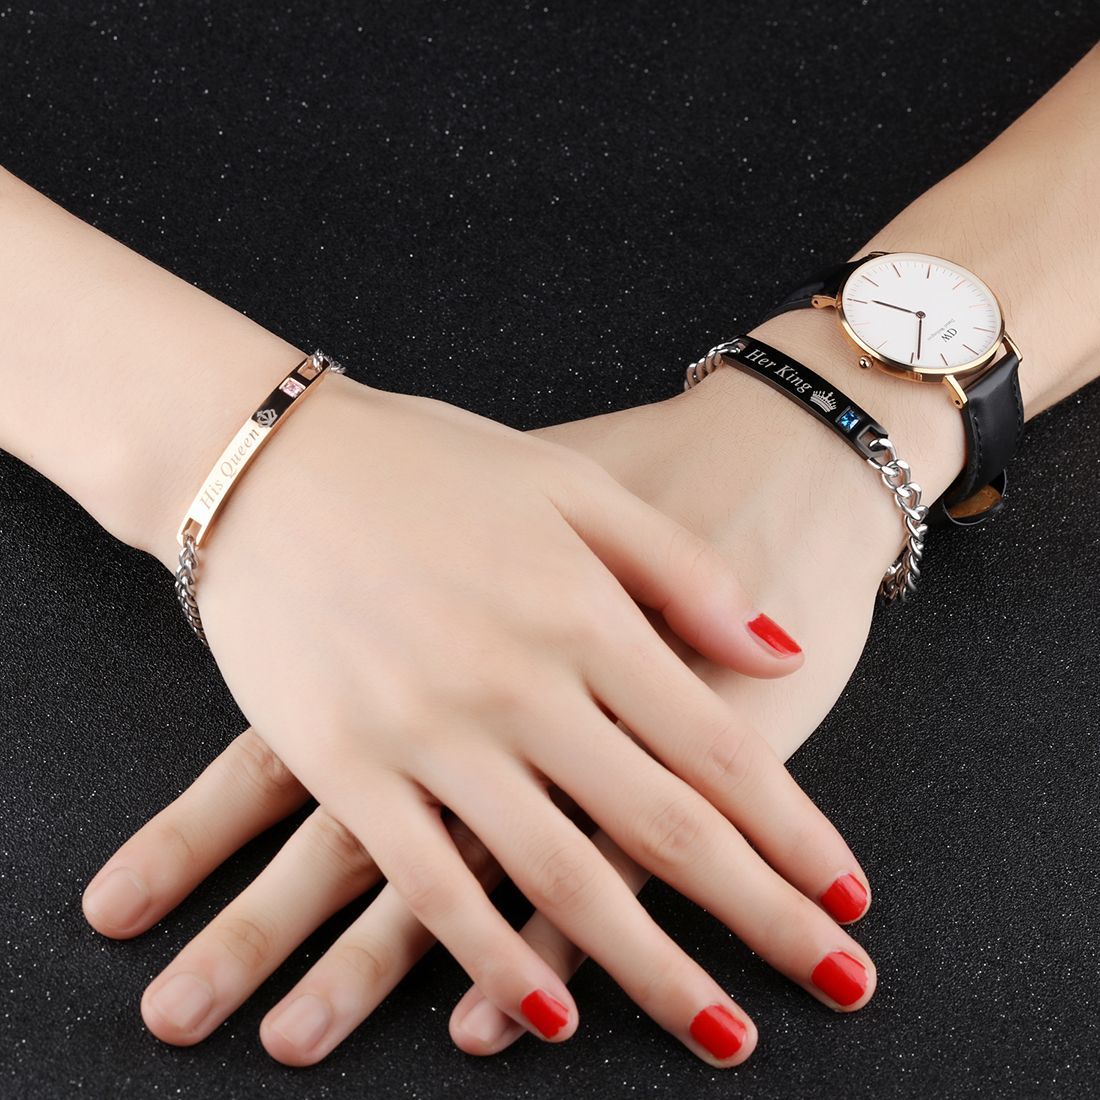 Buy Best Friend Magnetic Couple Bracelets Hand In Hand Bracelets Stainless  Steel Couples Bracelets For Women Men Gift at Amazonin